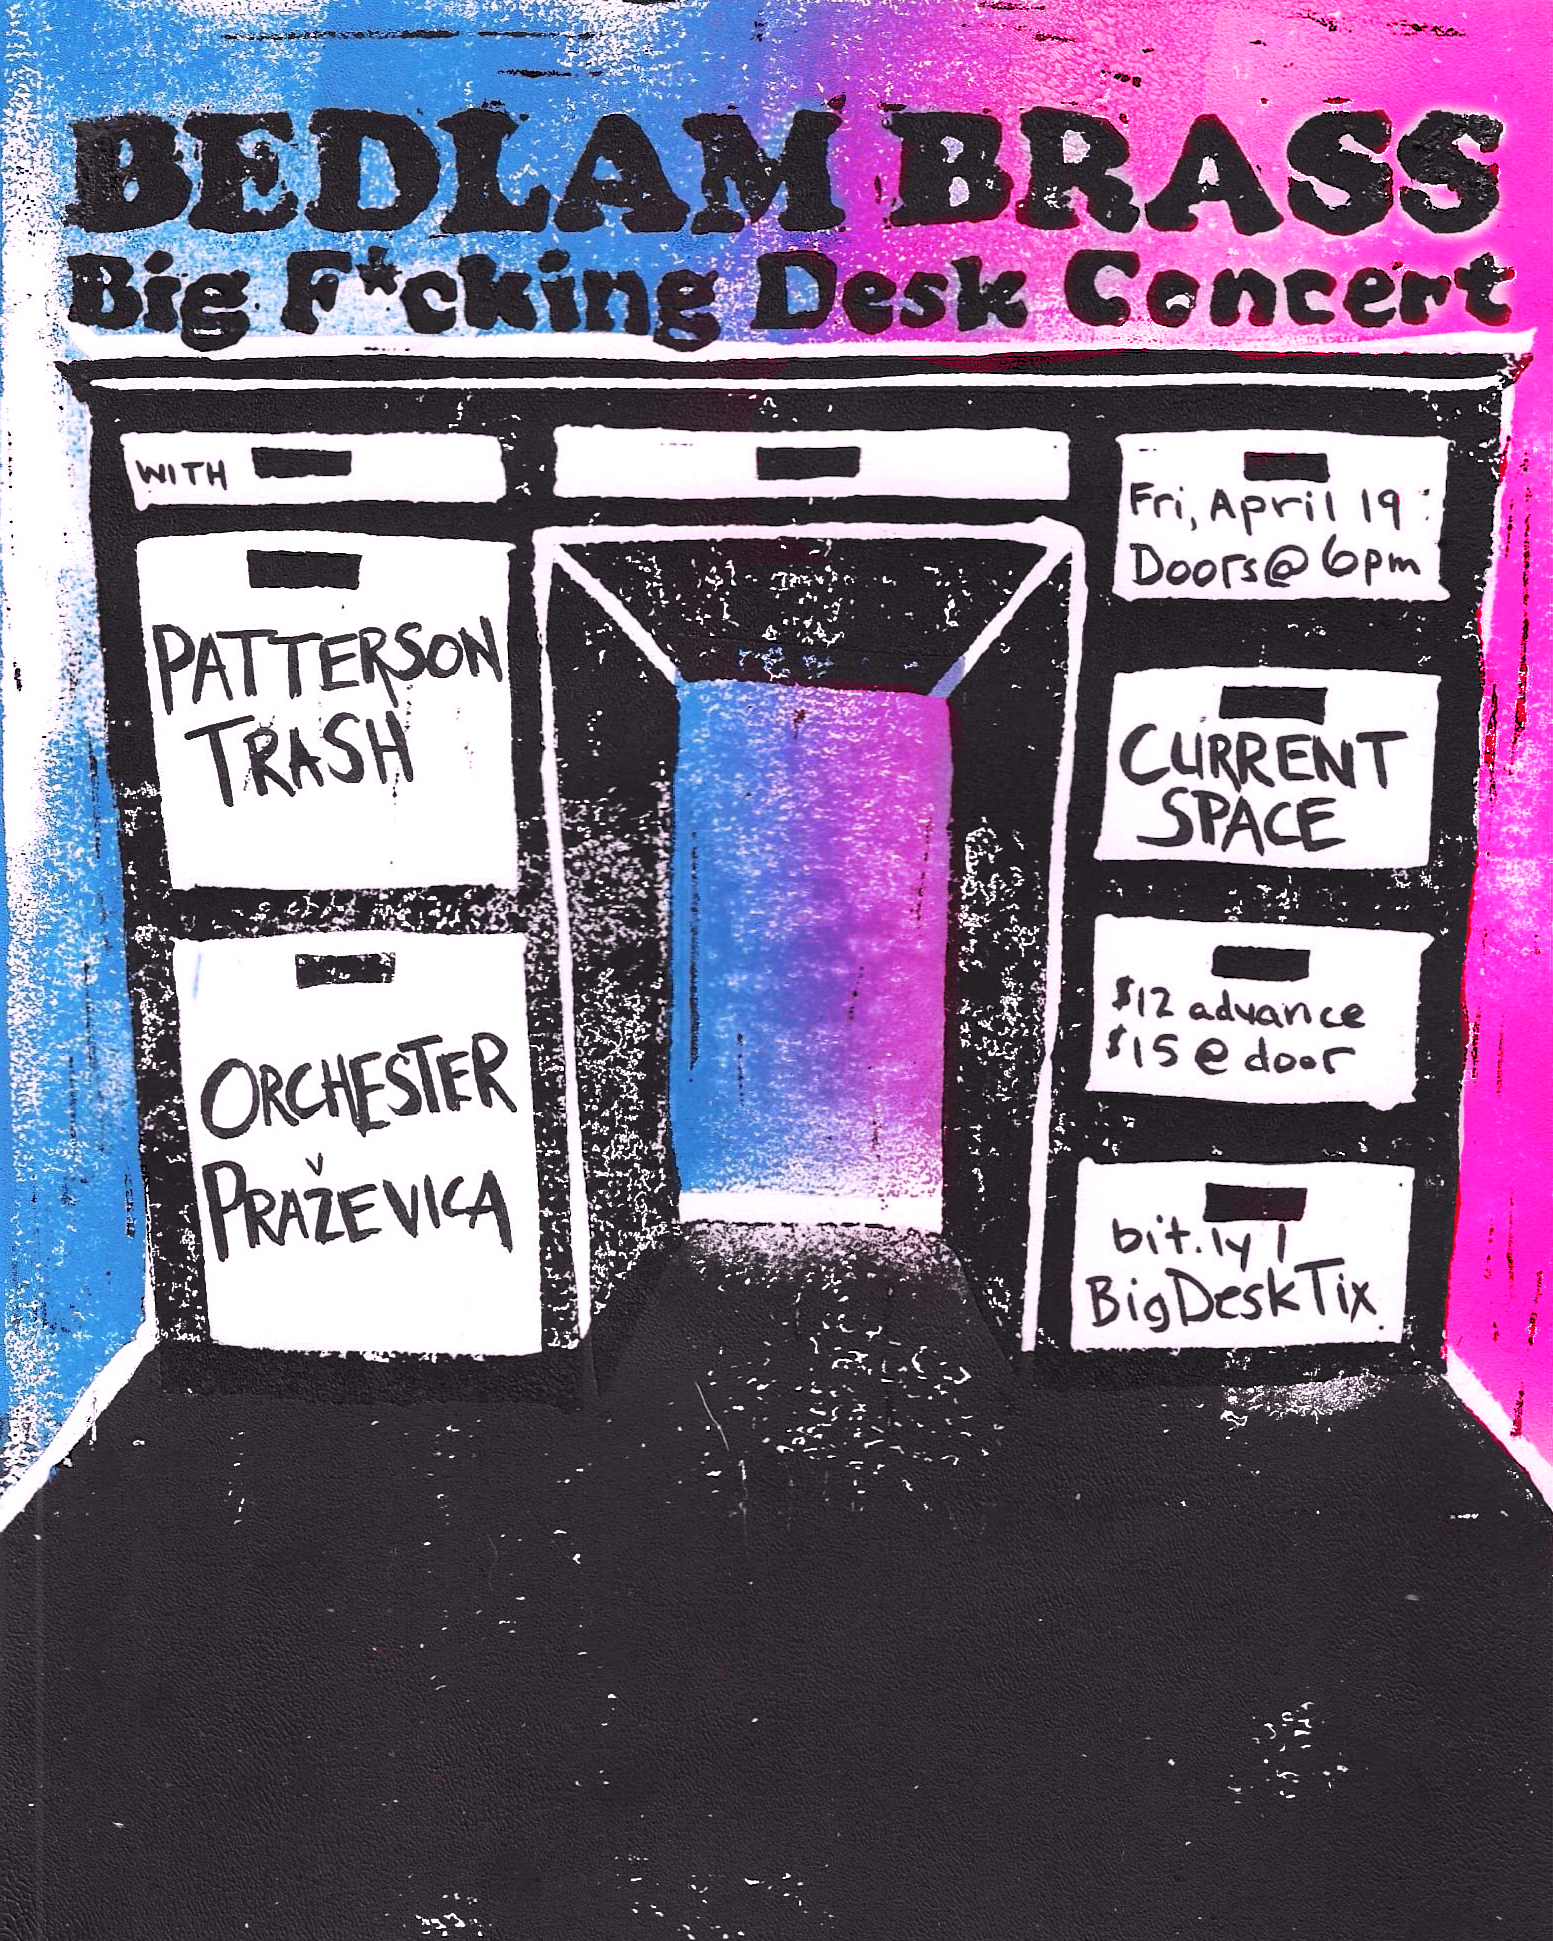 show poster for big fucking desk concert